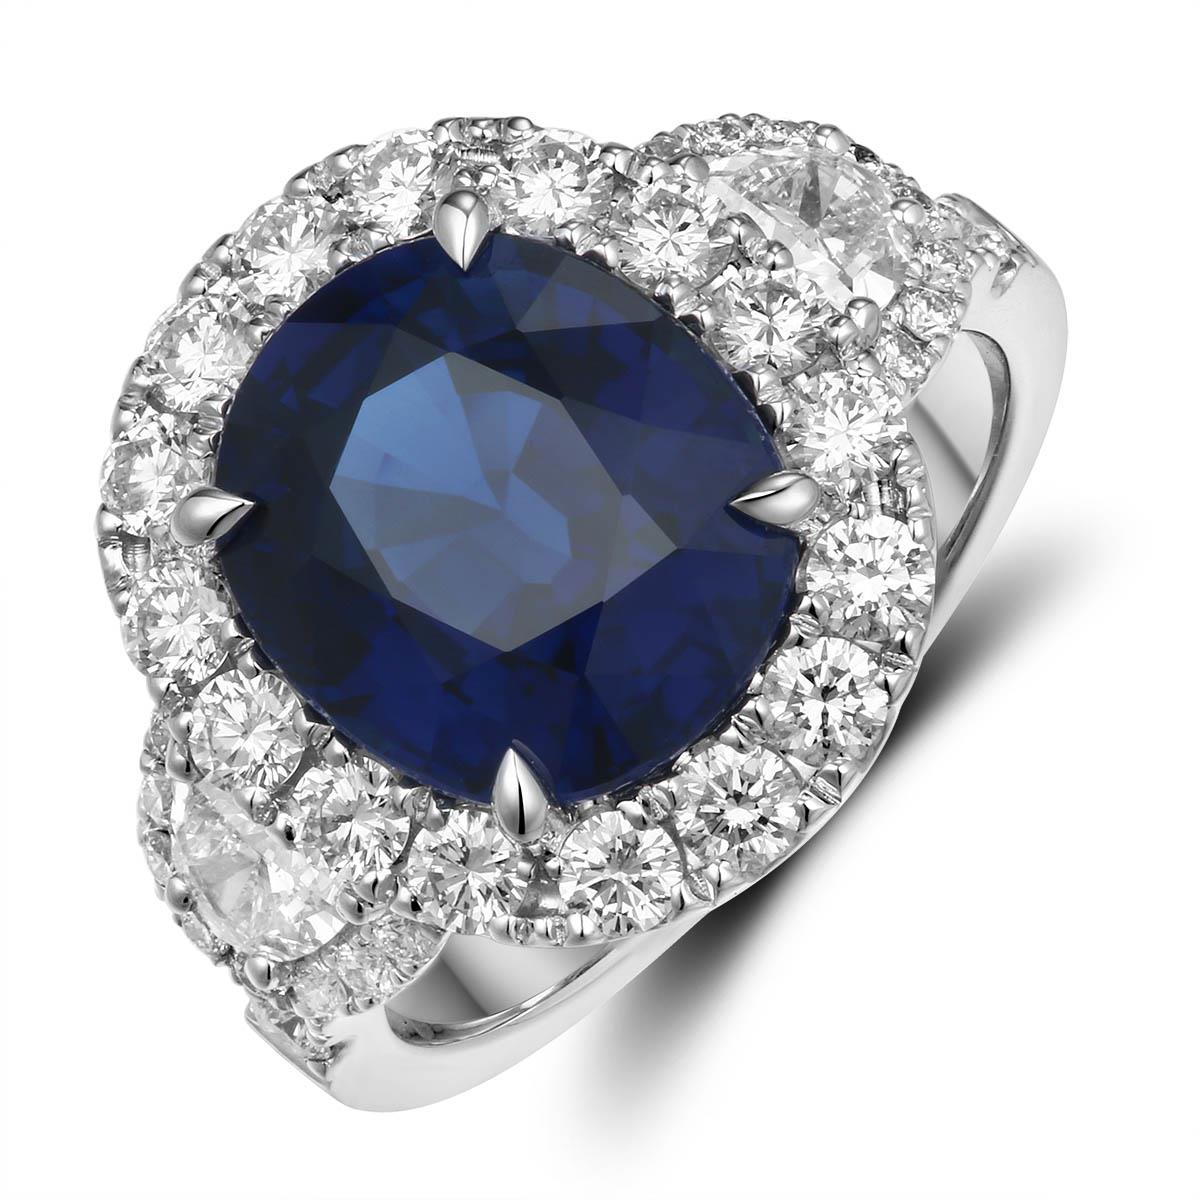 Ladies Statement 6.27ct Oval Cut Blue Sapphire & Diamond Ring